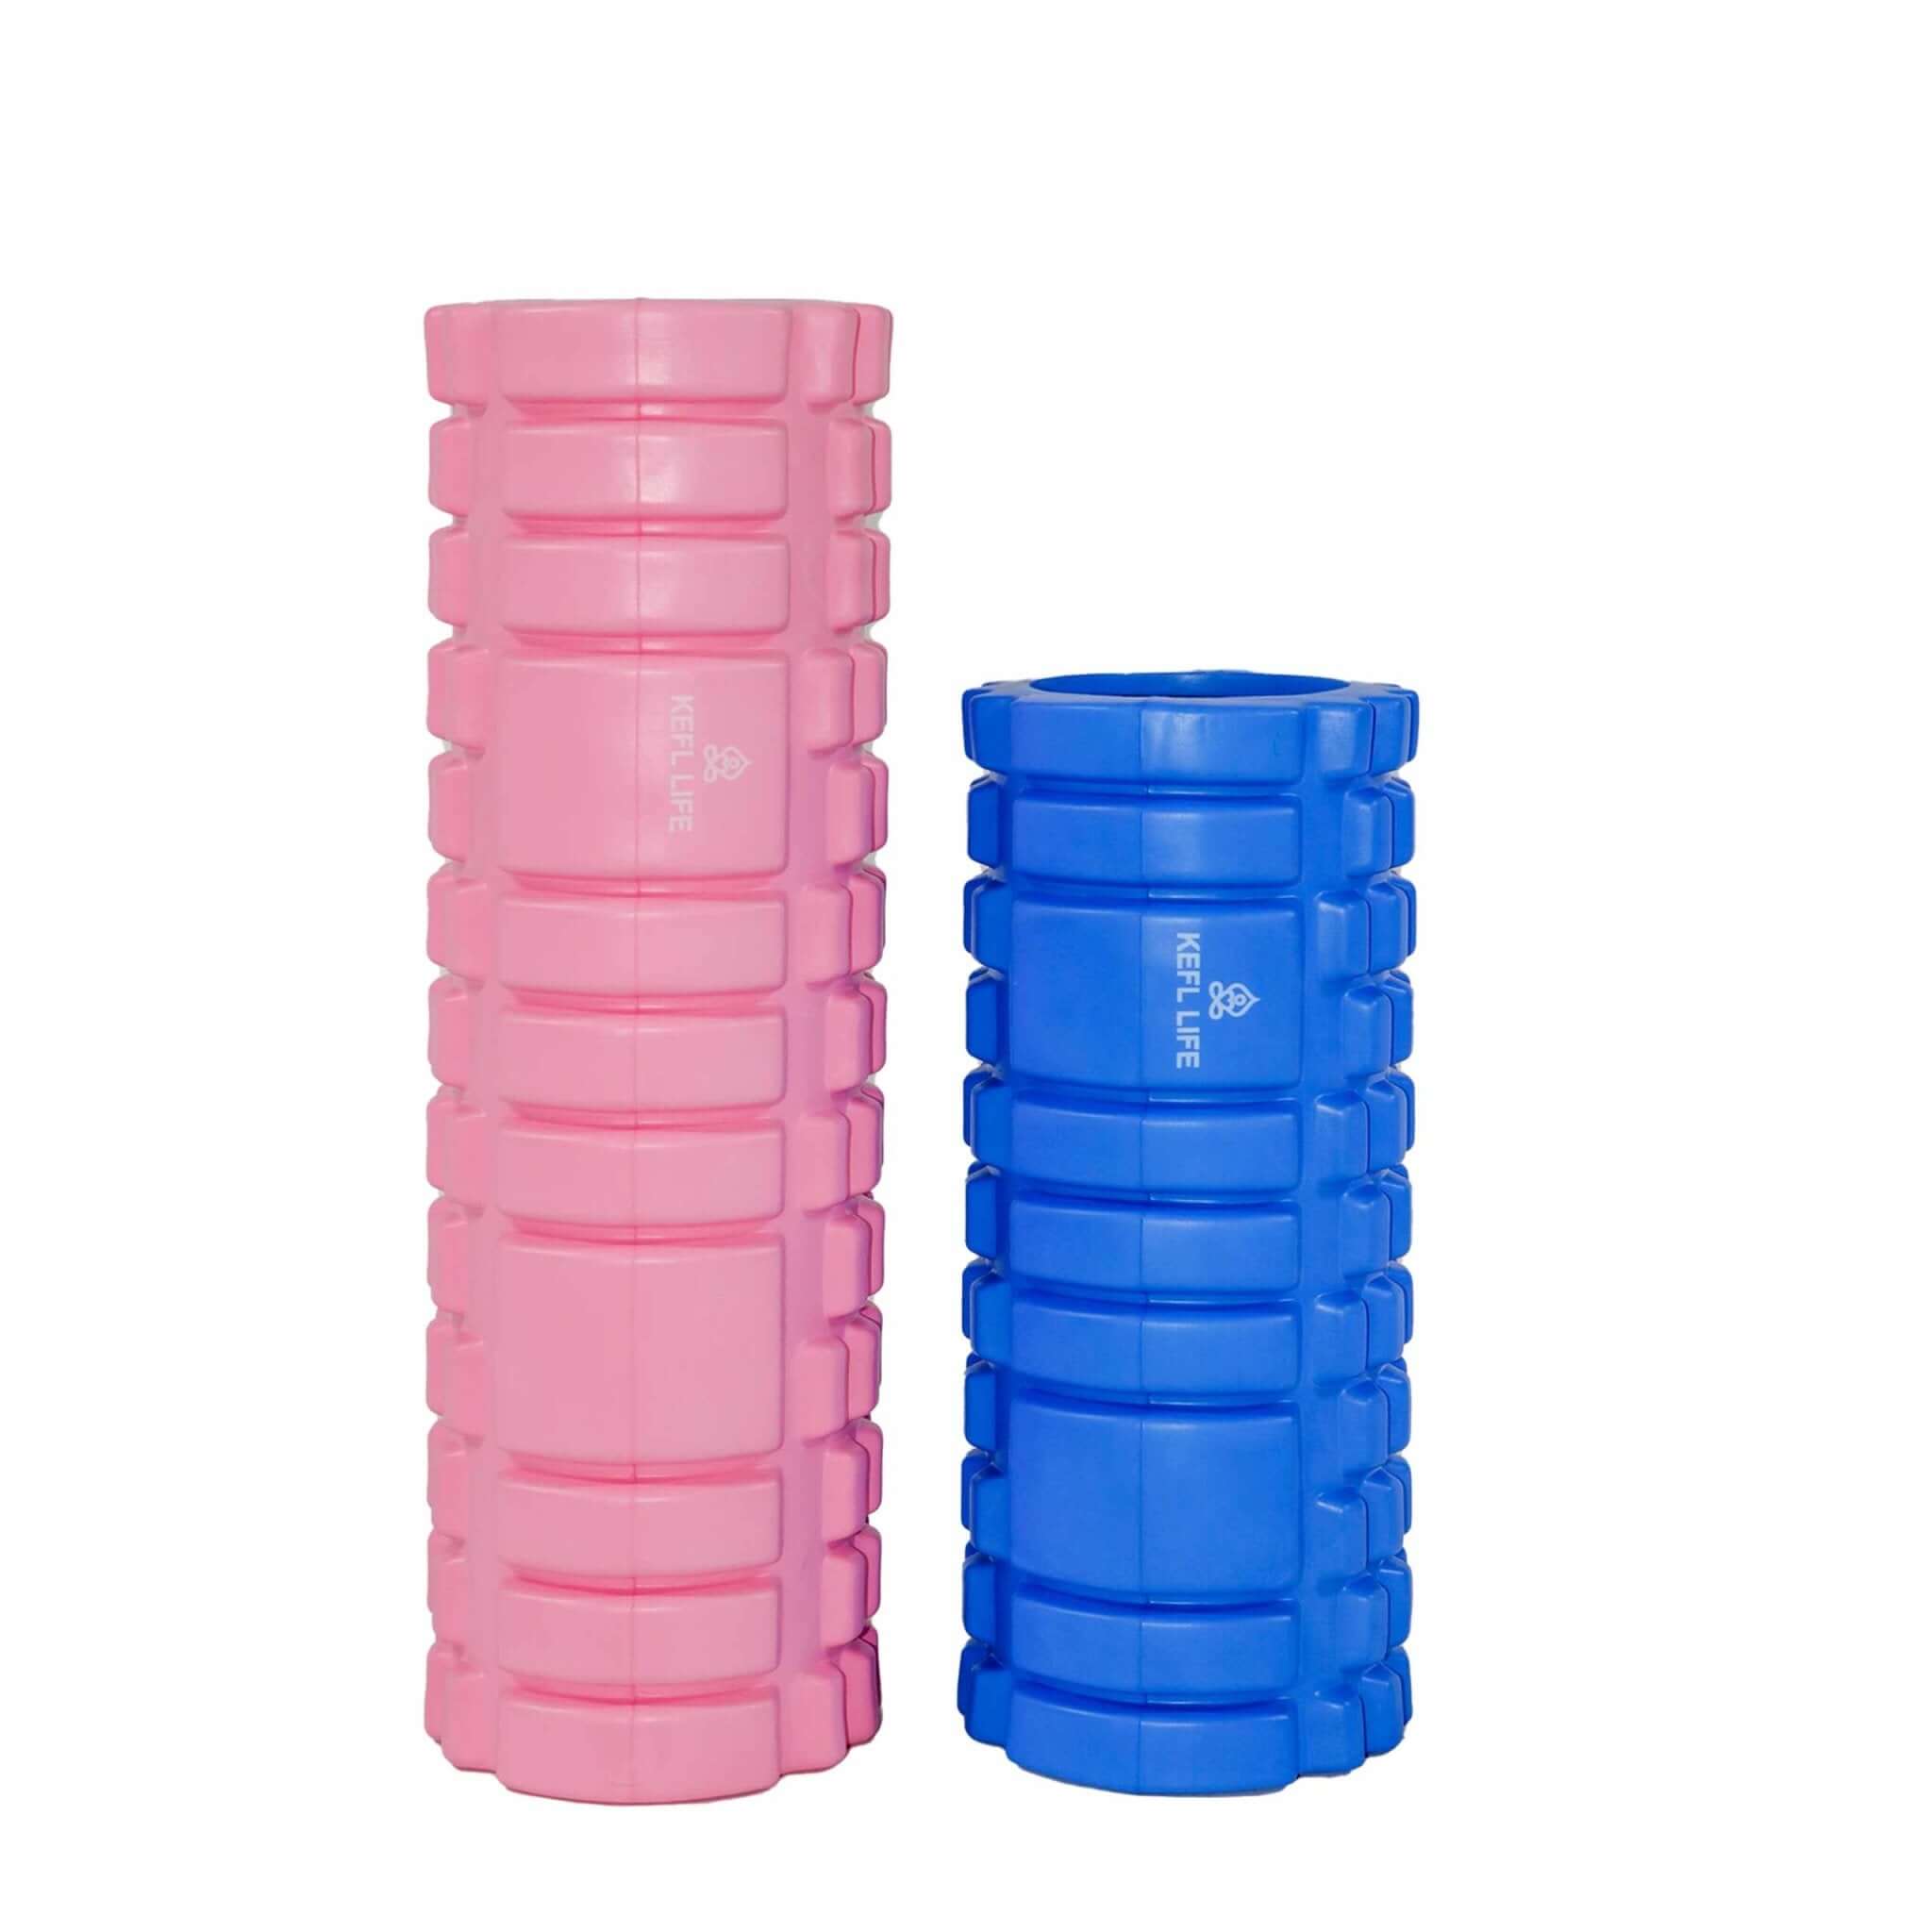 KEFL Life Yoga Foam Roller, Hollow, Blue & Pink - KEFLUK